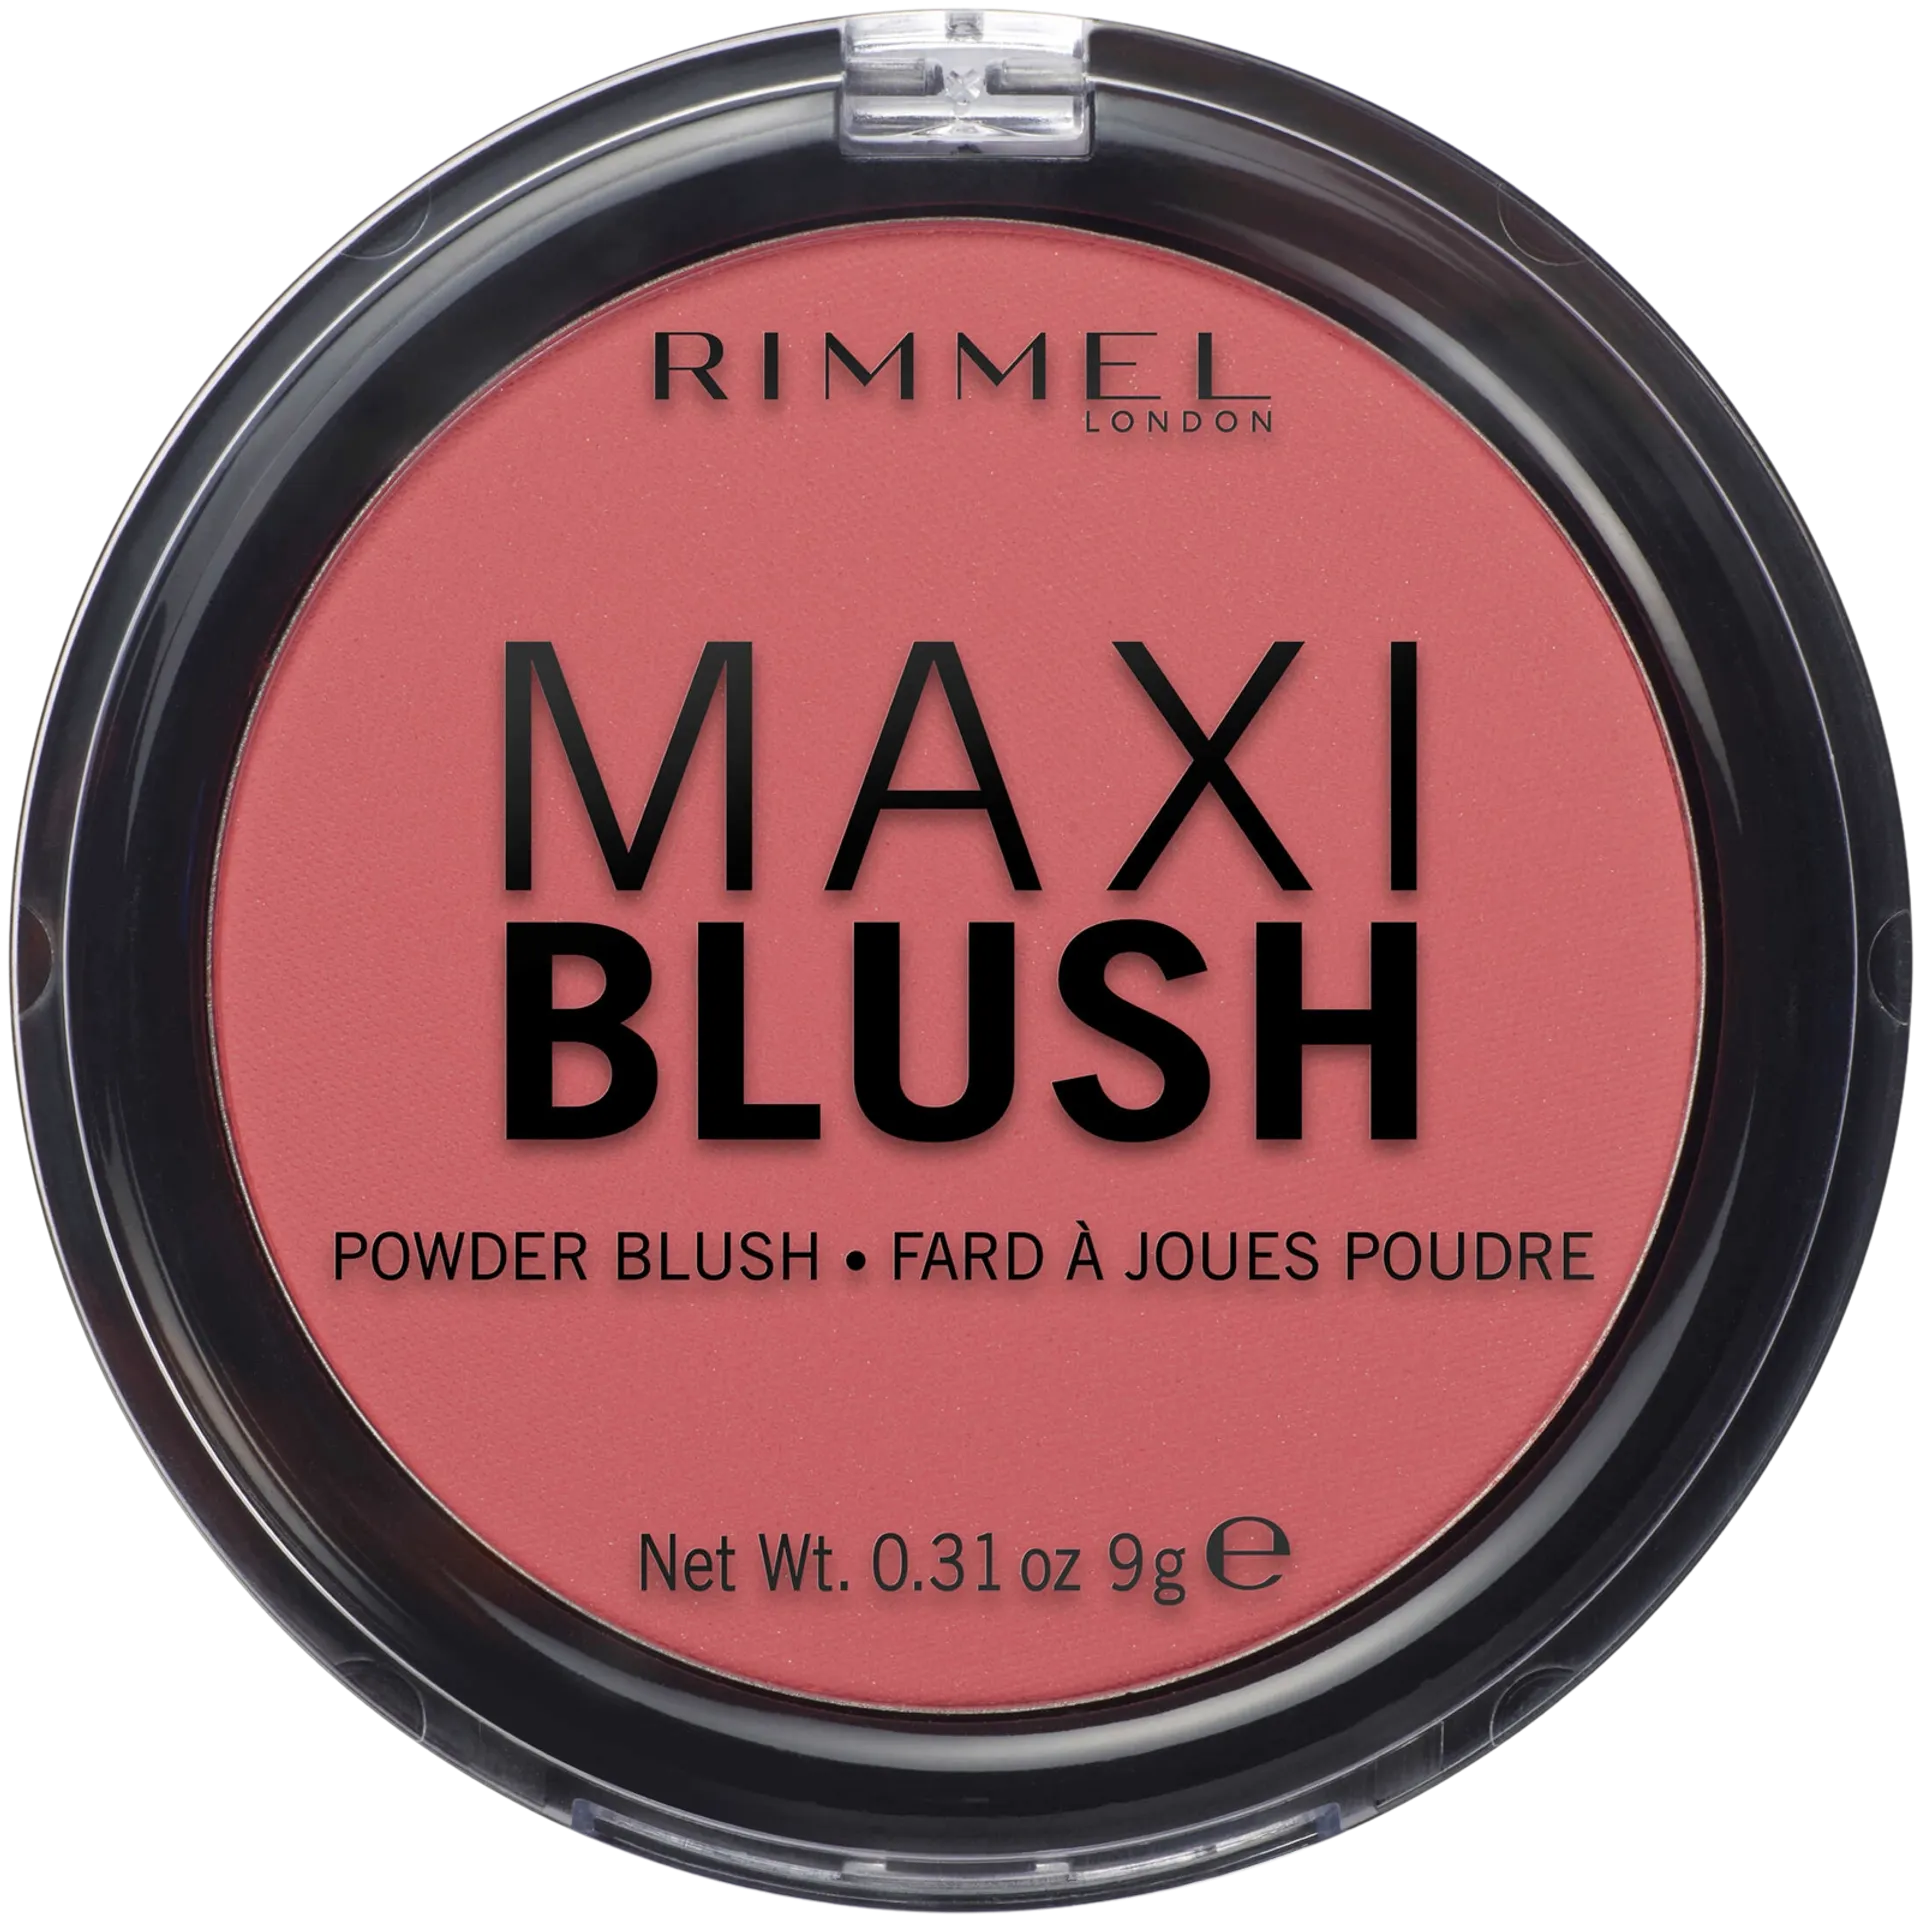 Rimmel Maxi Blush Powder Blusher 003 Wild Card poskipuna 9g - 1